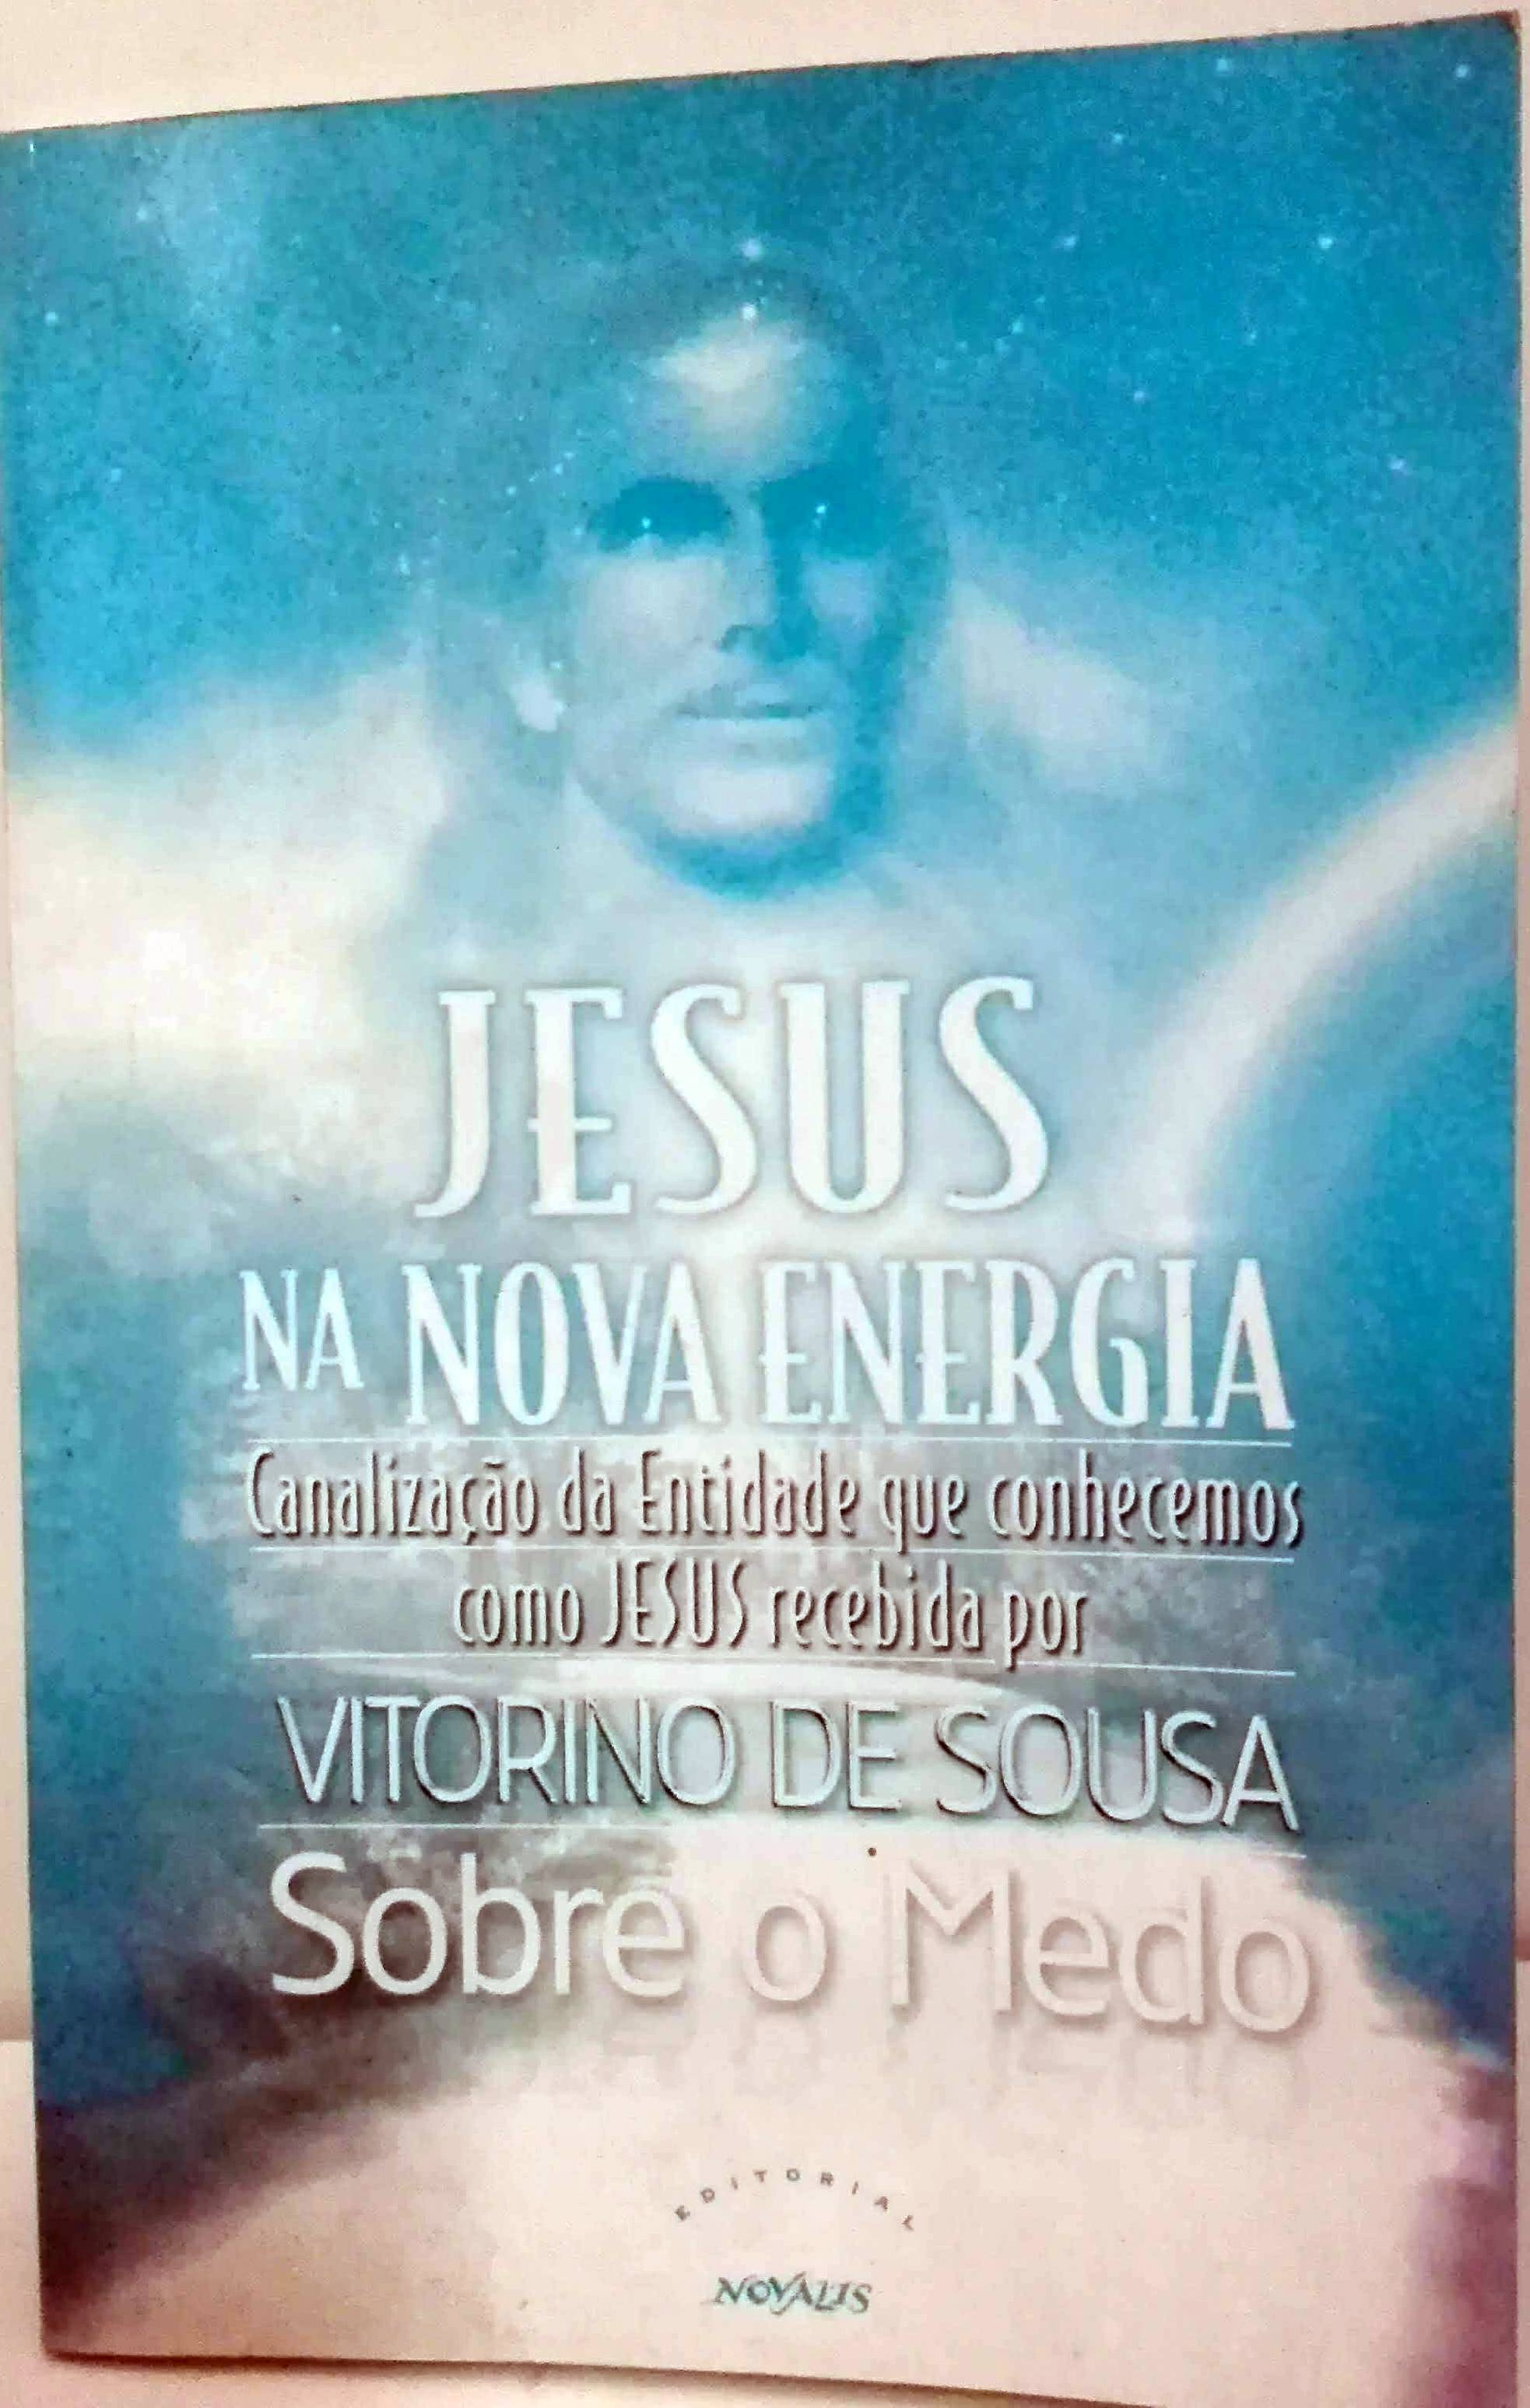 jesus no nova energia -Sobre o medo, Vitorino de Sousa